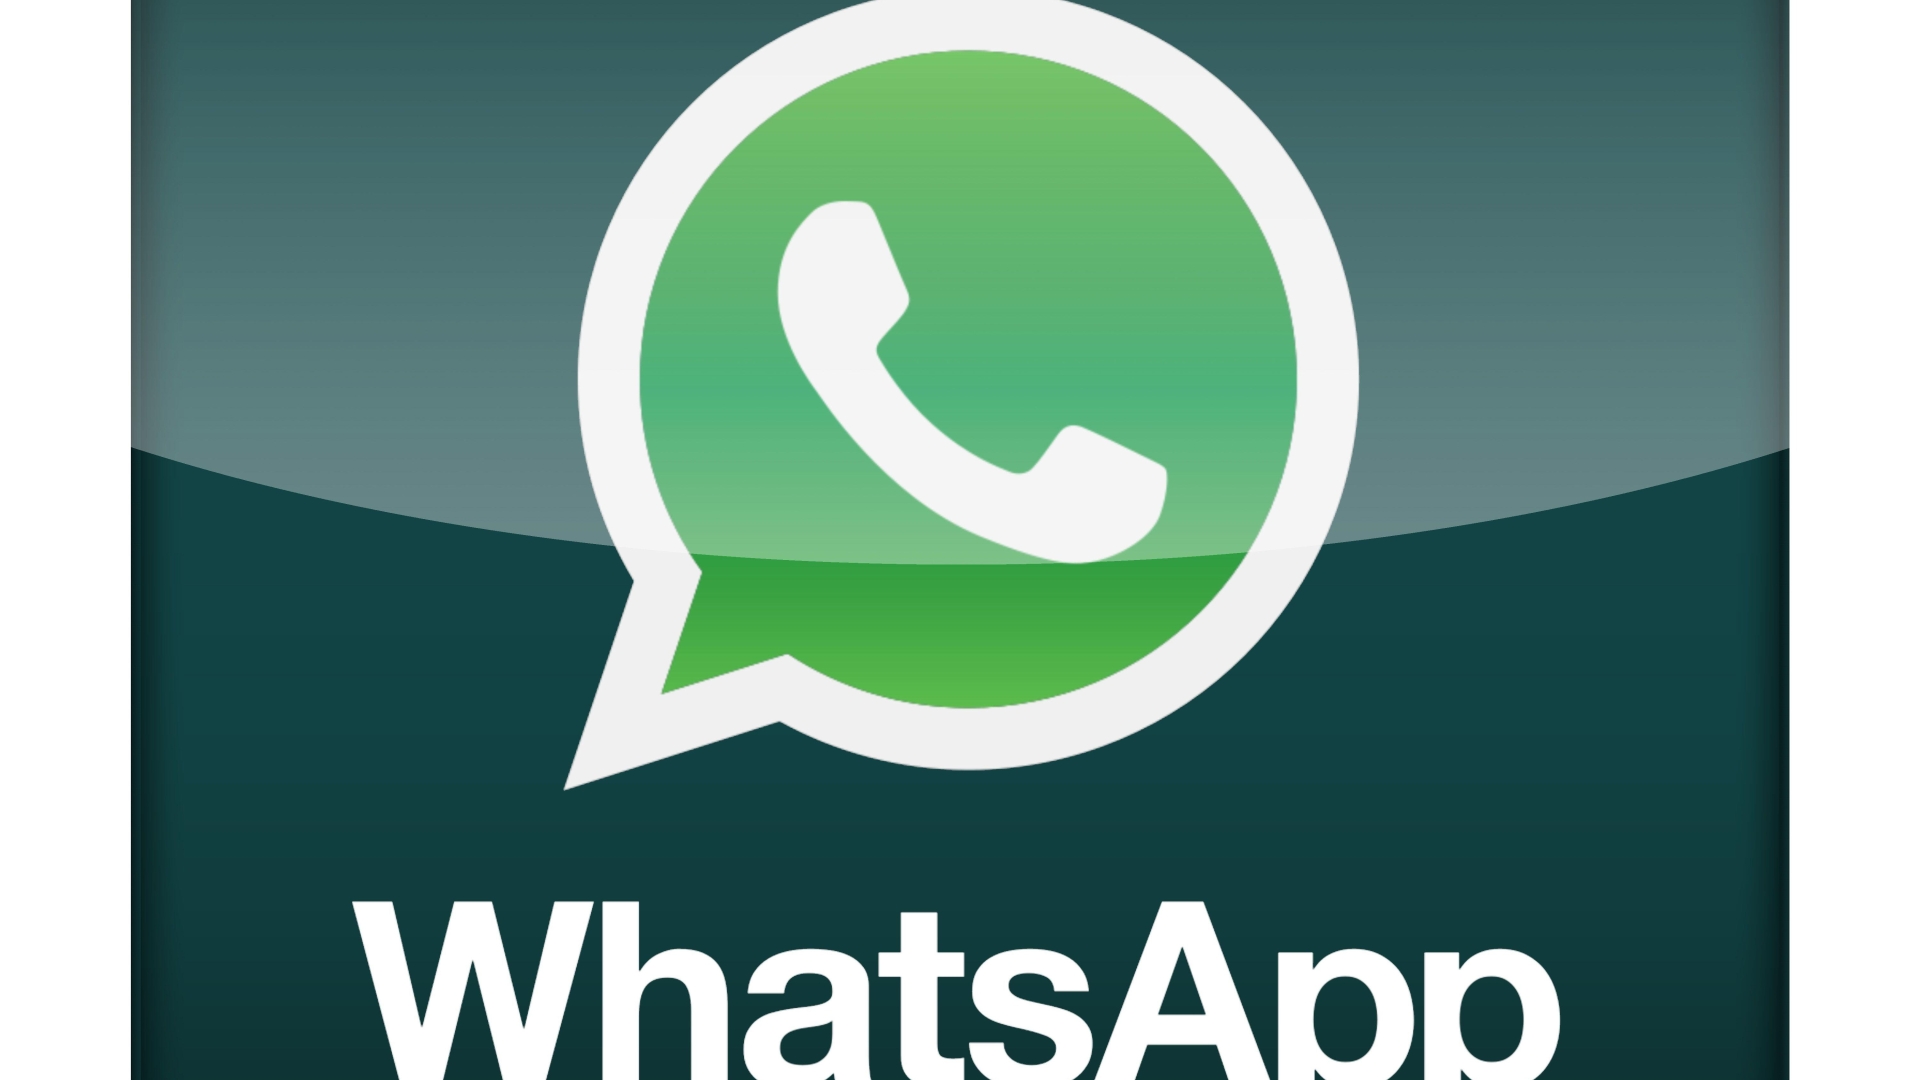 What does Last Seen in WhatsApp mean?